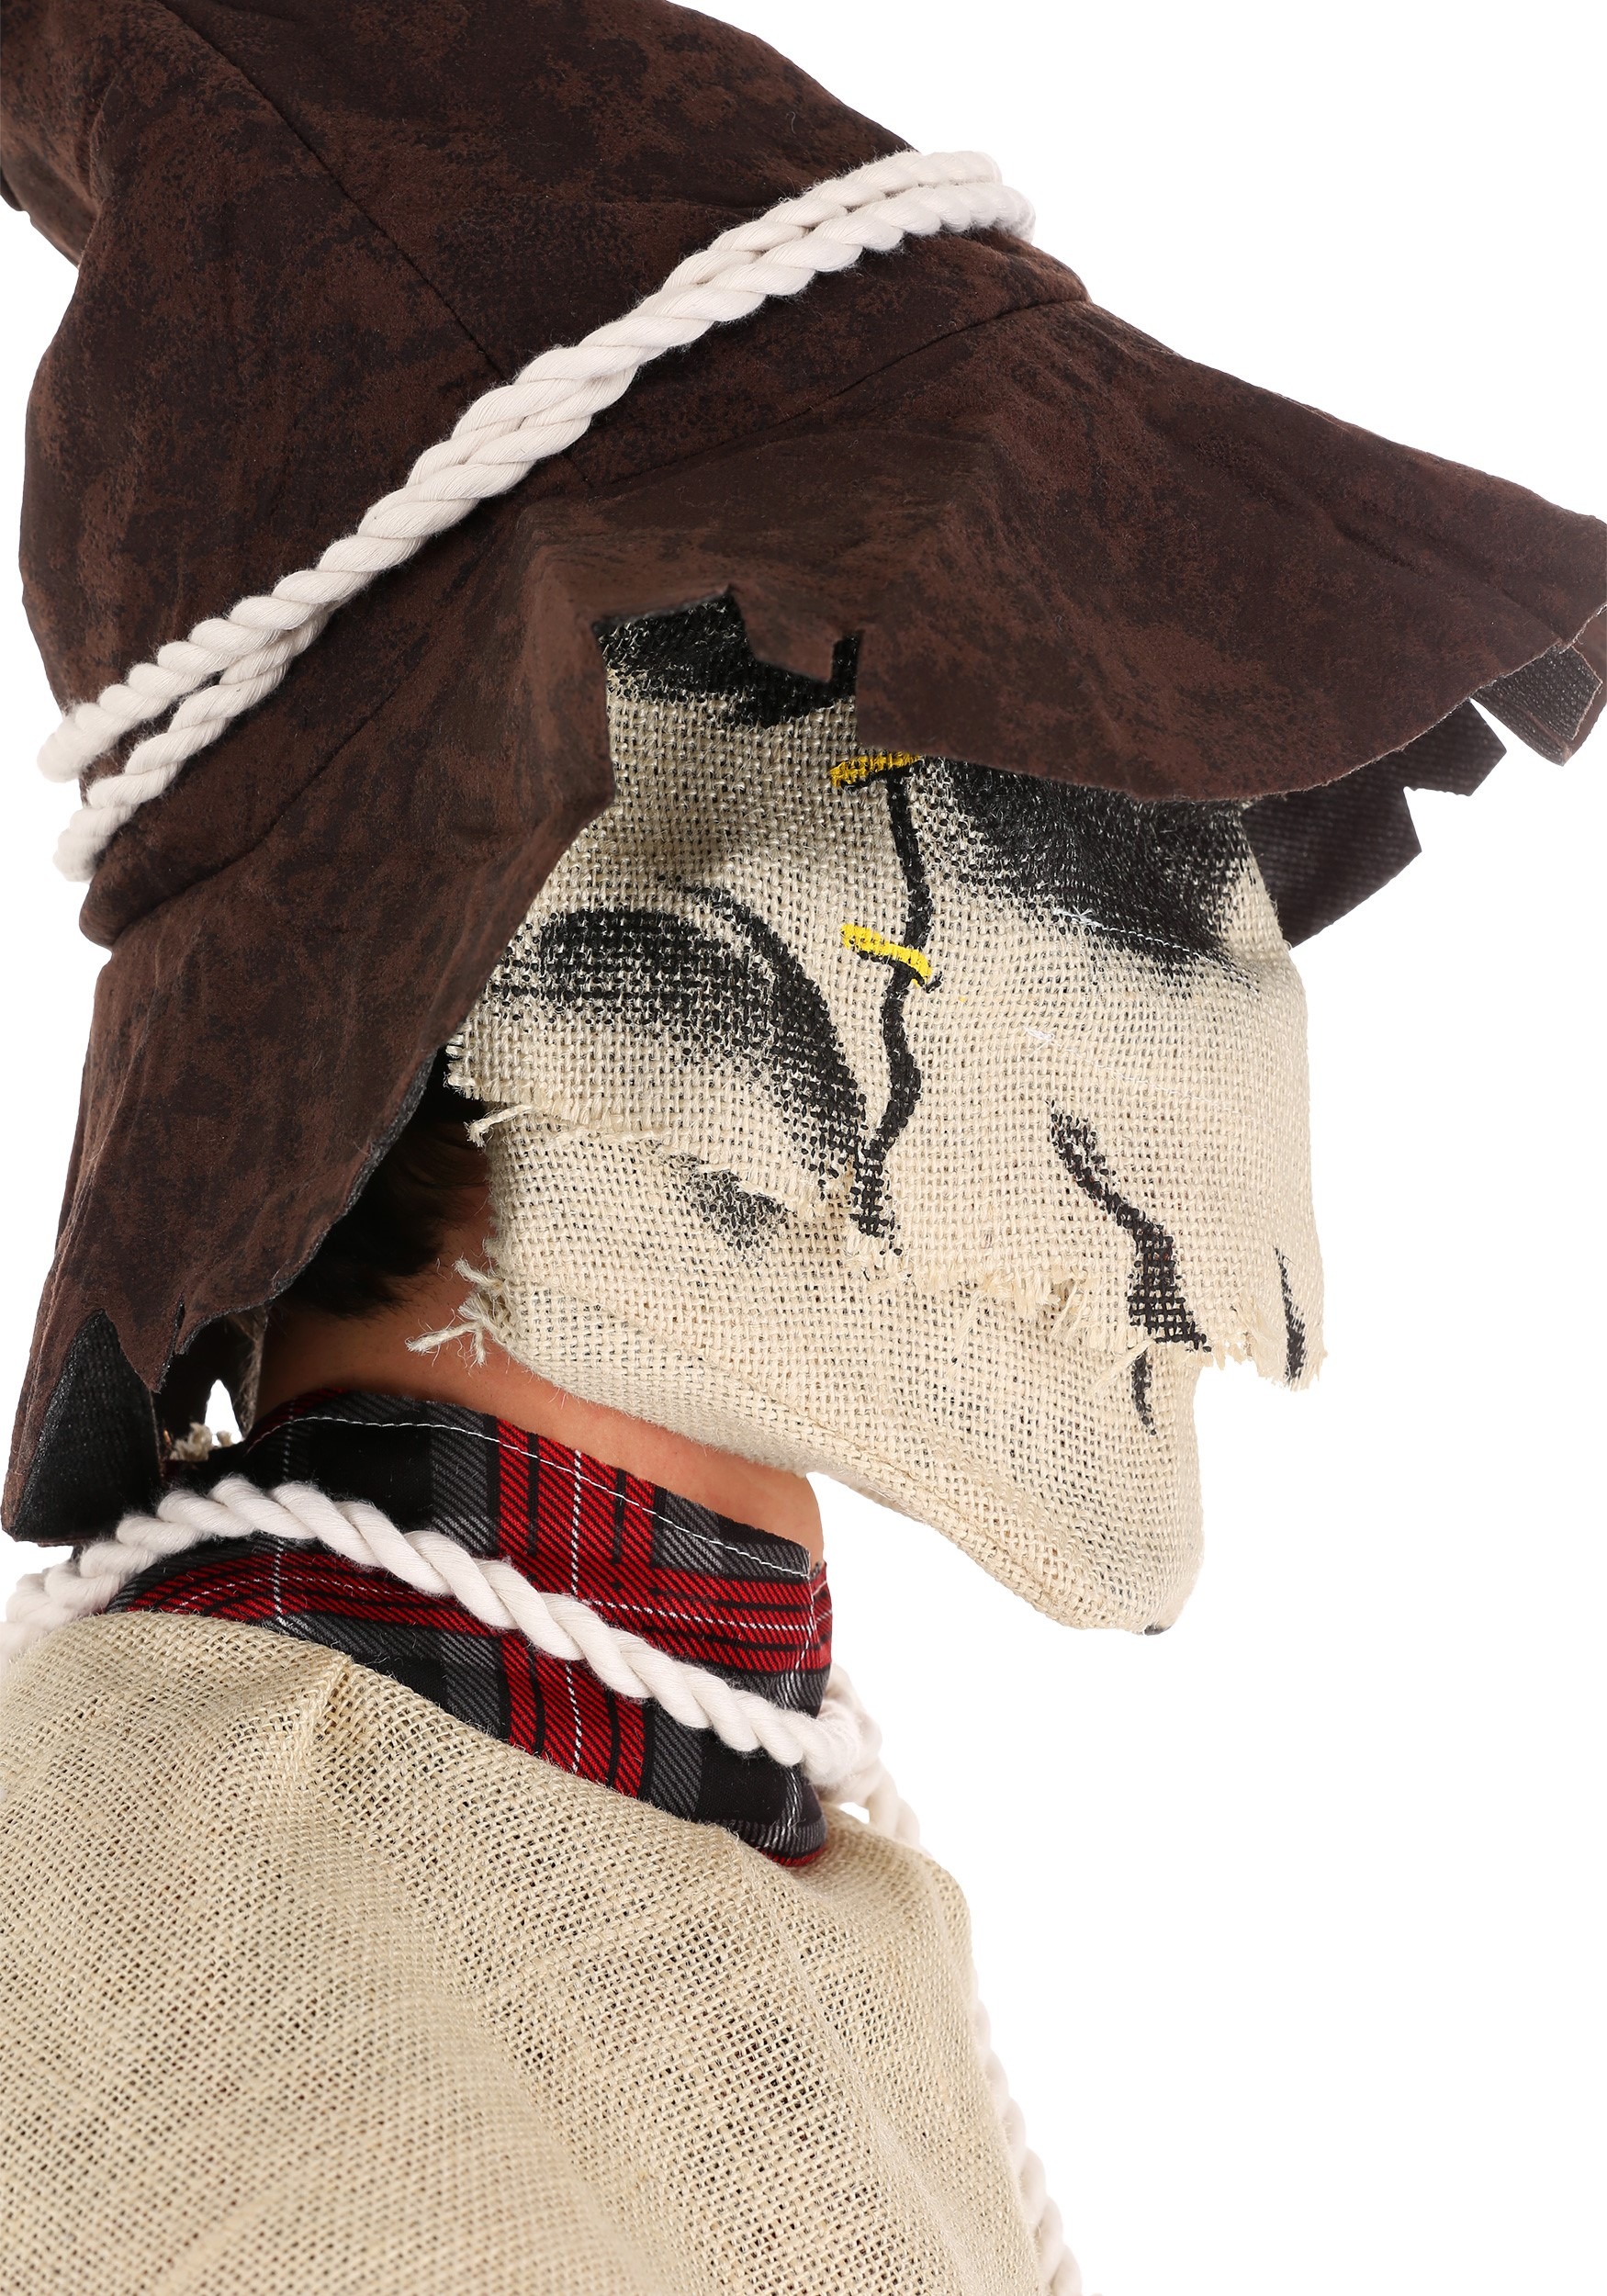 Sadistic Scarecrow Ani-Motion Mask Haunt Adult Costume 